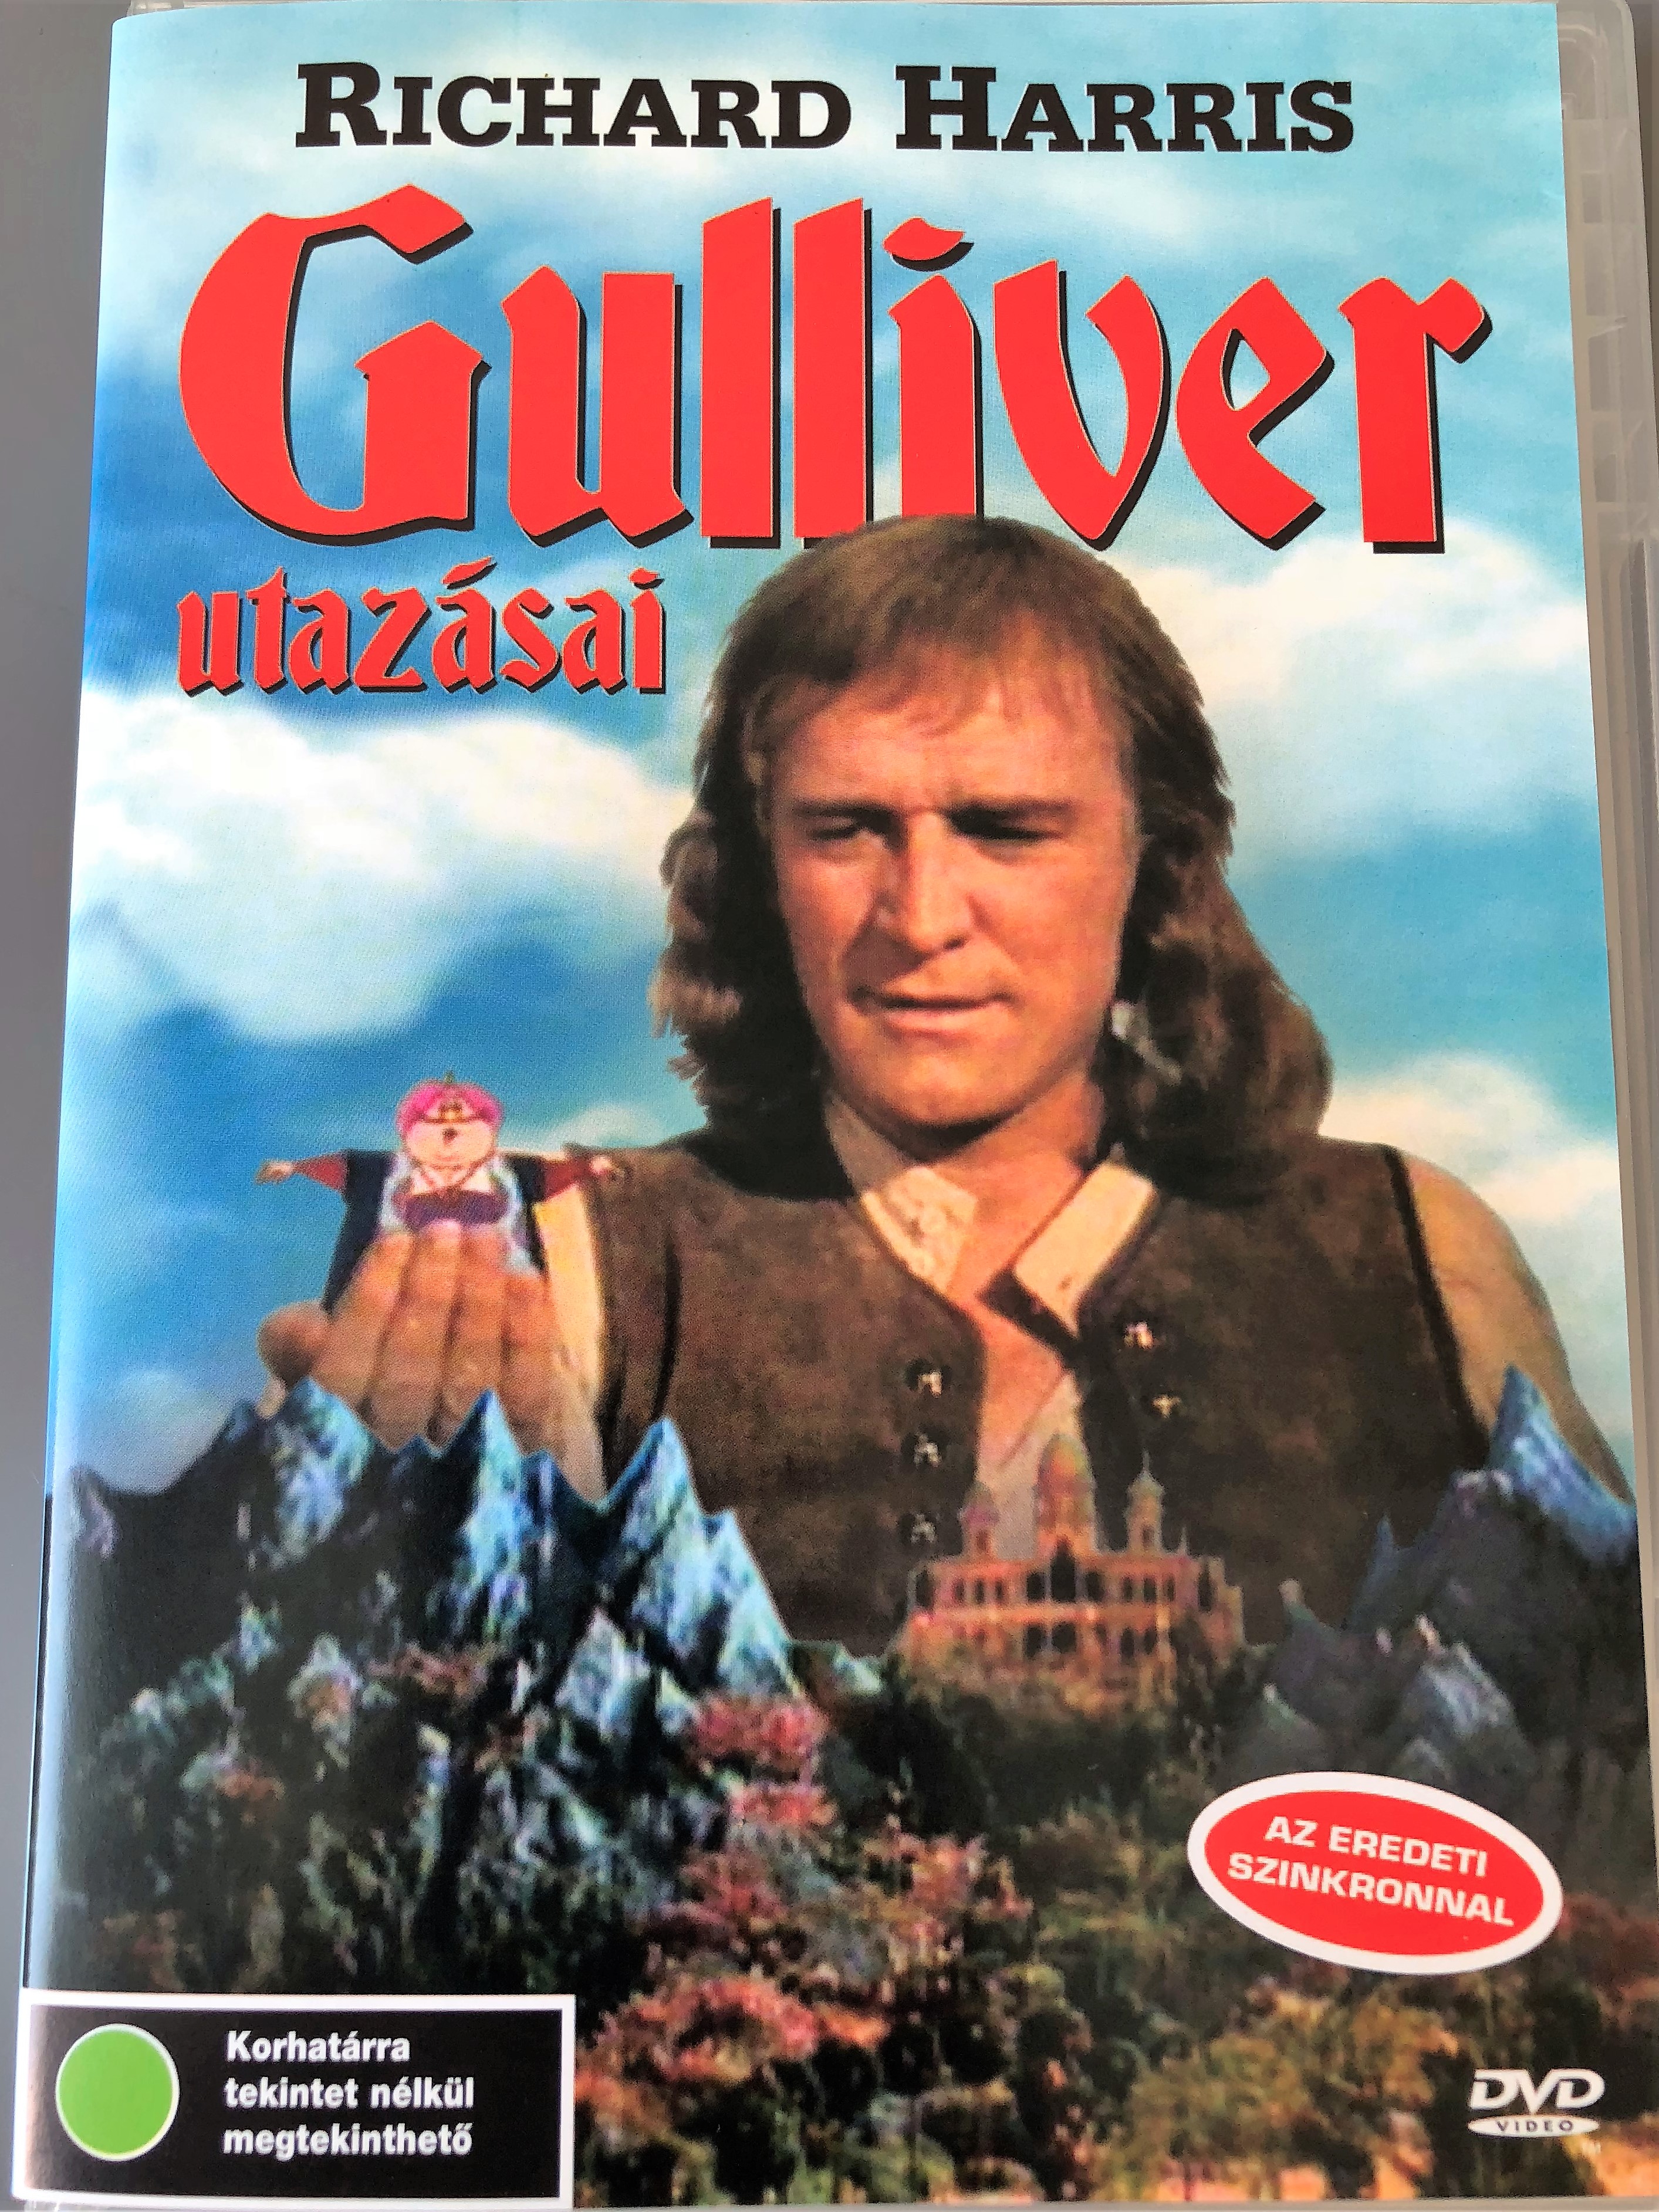 gulliver-s-travels-dvd-1977-gulliver-utaz-sai-directed-by-peter-r.-hunt-starring-richard-harris-catherine-schell-norman-shelley-meredith-edwards-1-.jpg